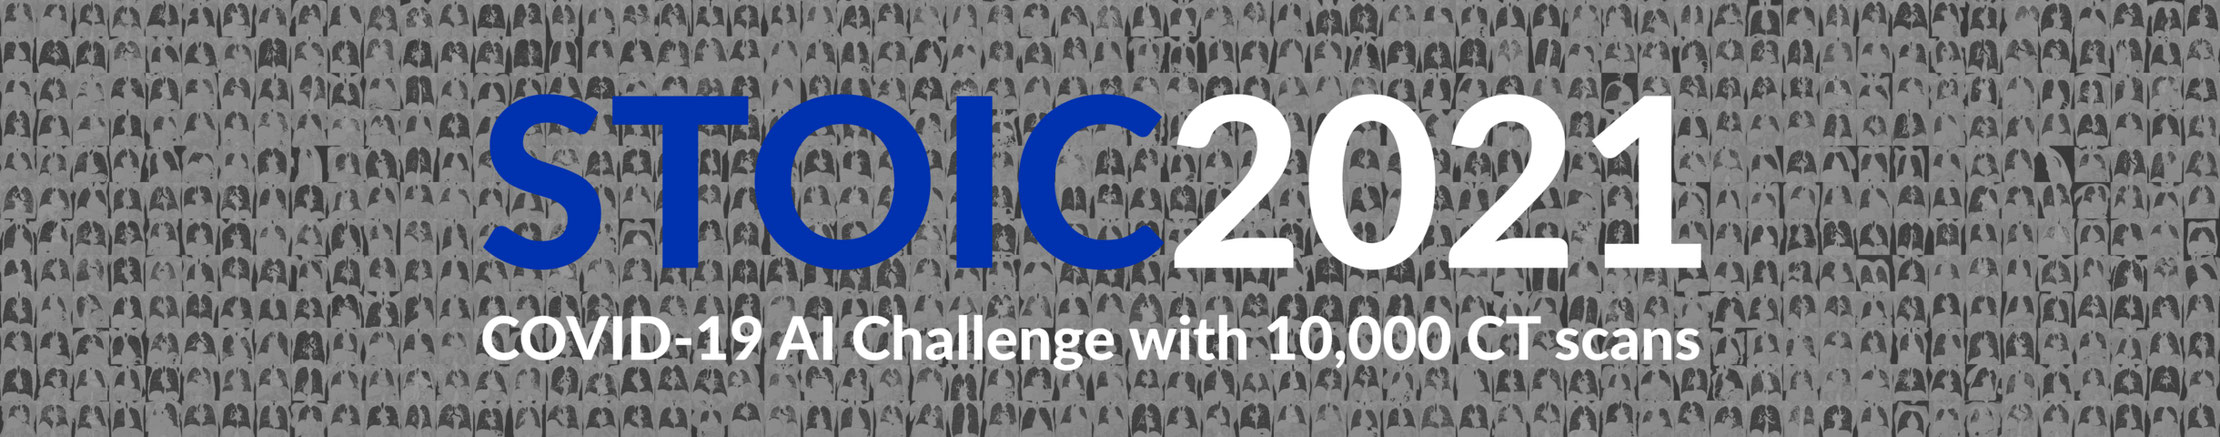 STOIC2021 - COVID-19 AI Challenge Banner